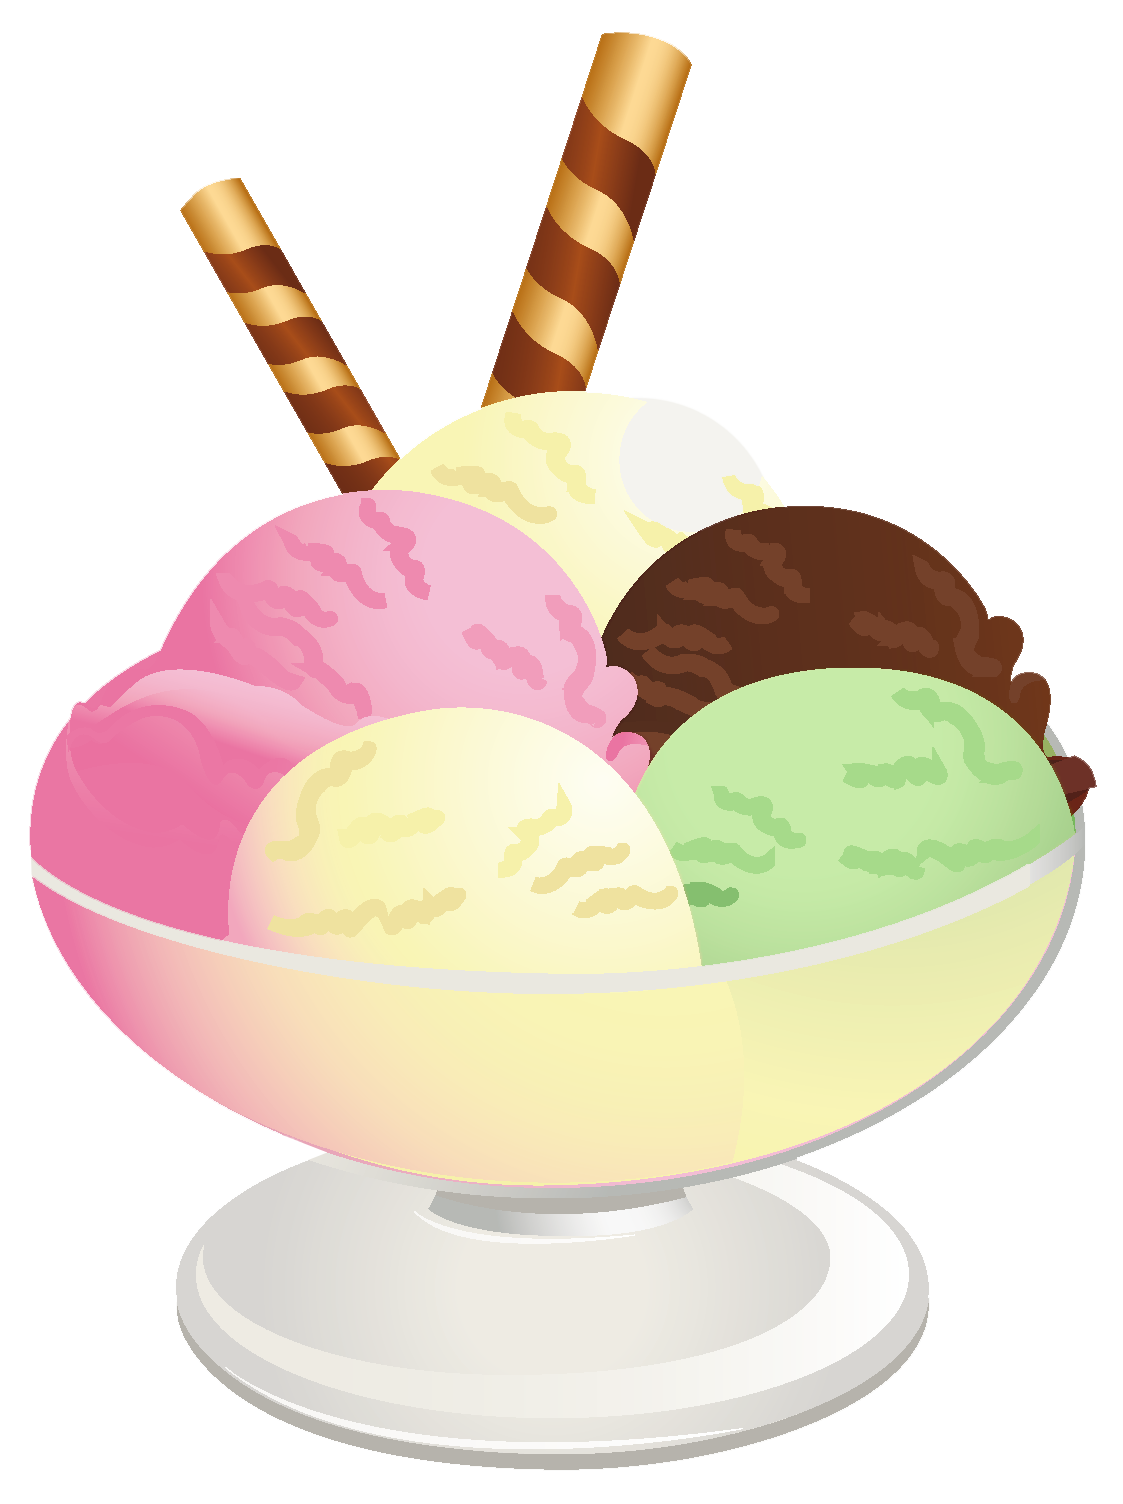 Ice cream sundae clipart cliparts